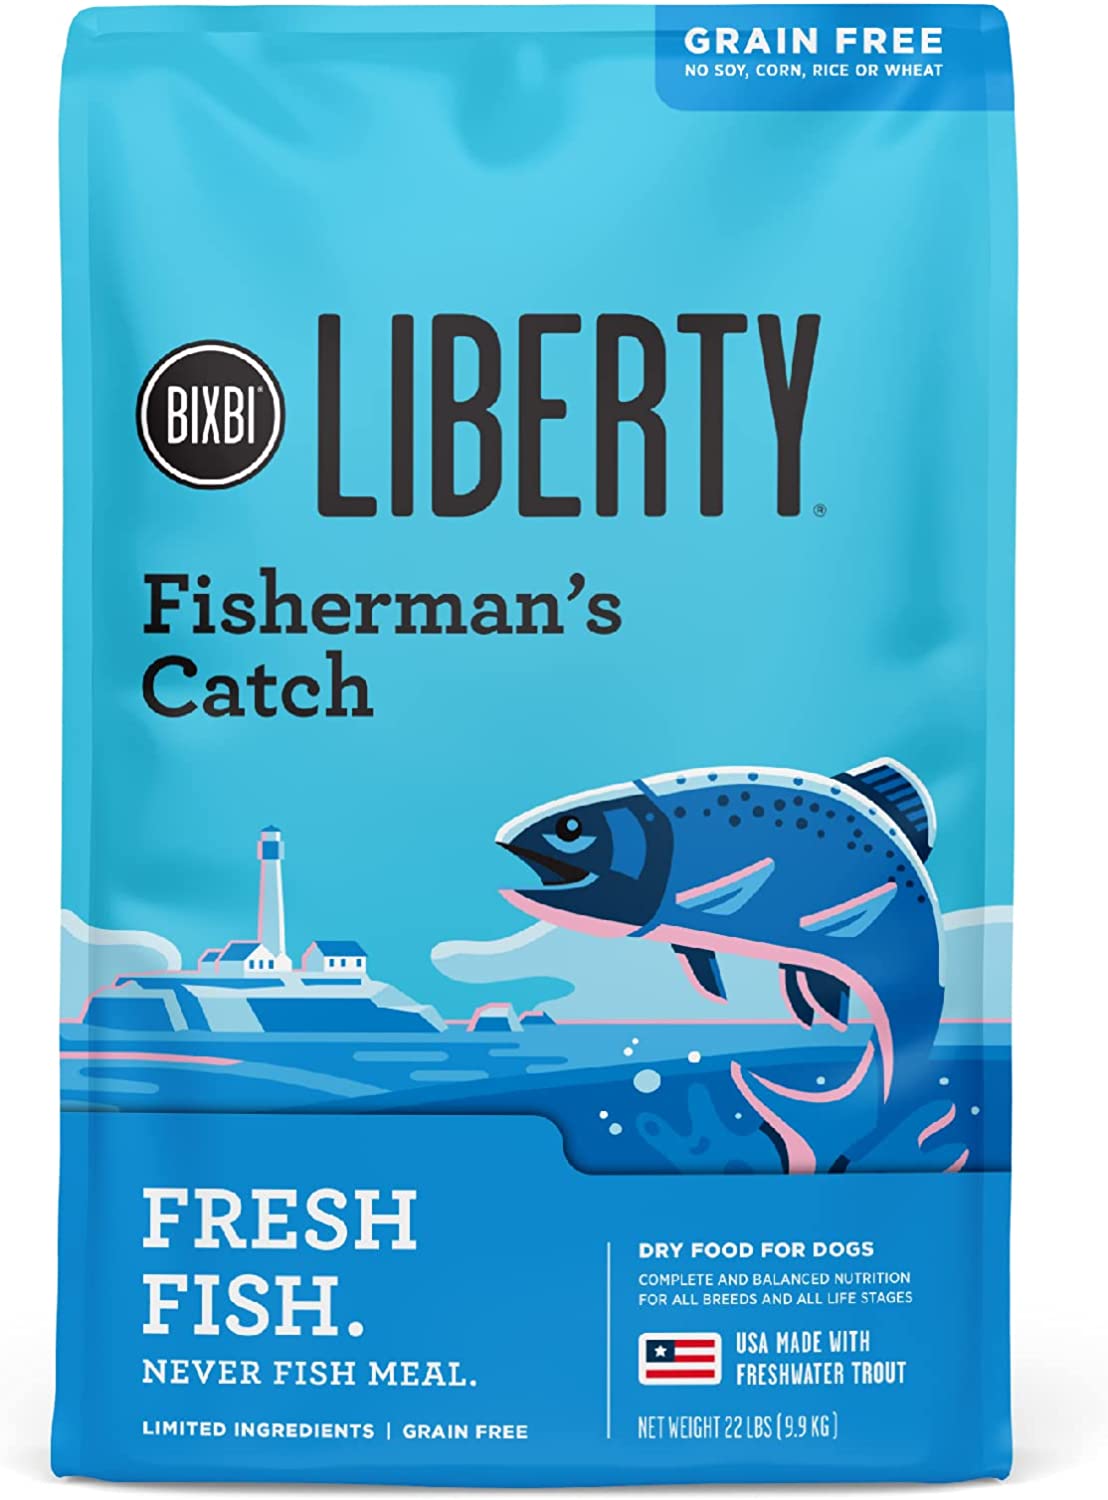 Bixbi Liberty Fisherman’s Catch - BlackPaw - For Every Adventure